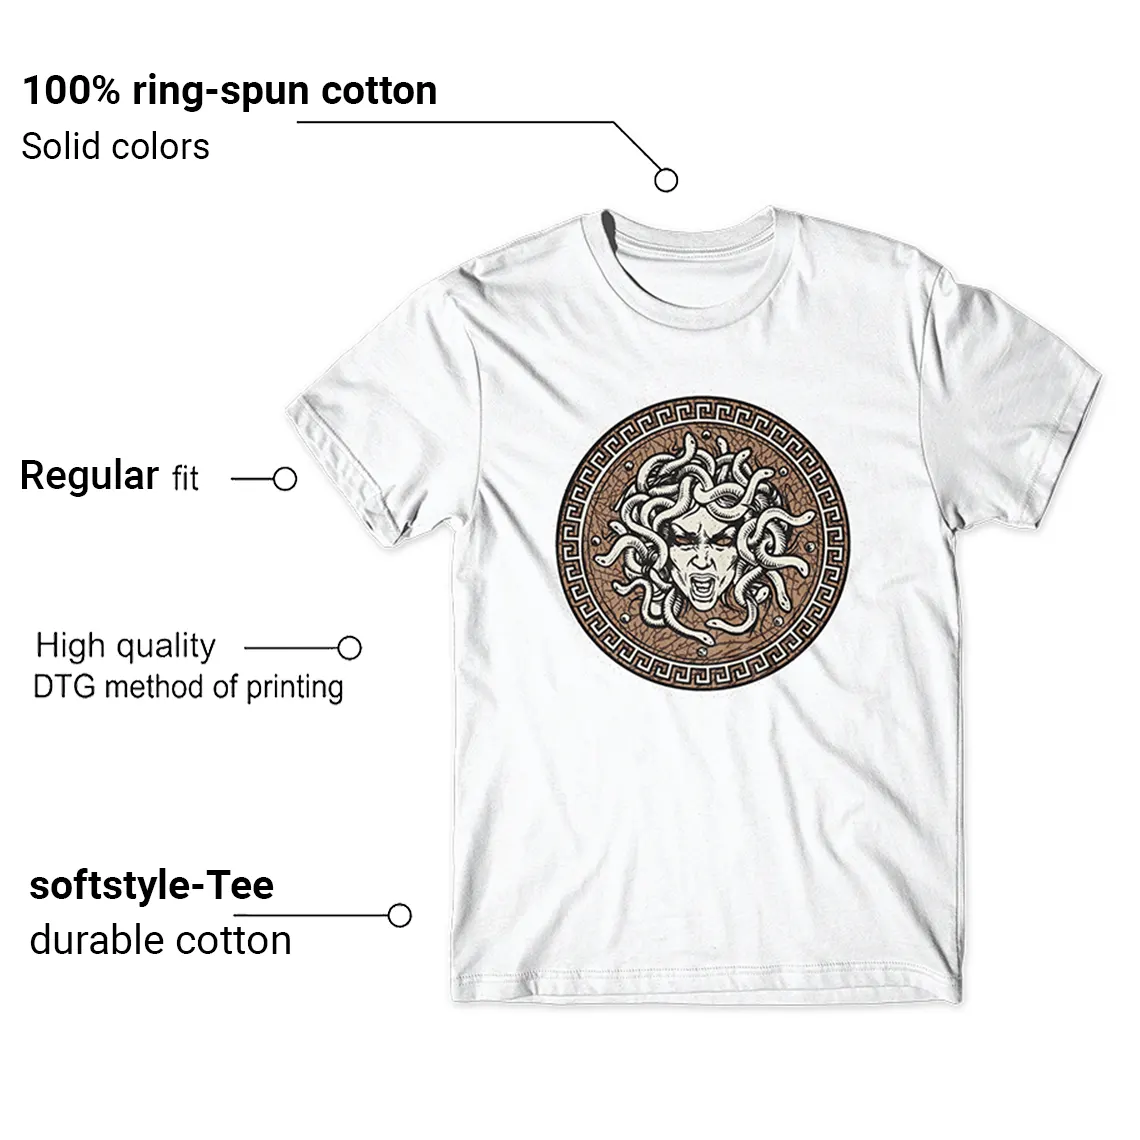 Jordan 3 Palomino Outfit Matching Shirt Medusa Graphic Features.